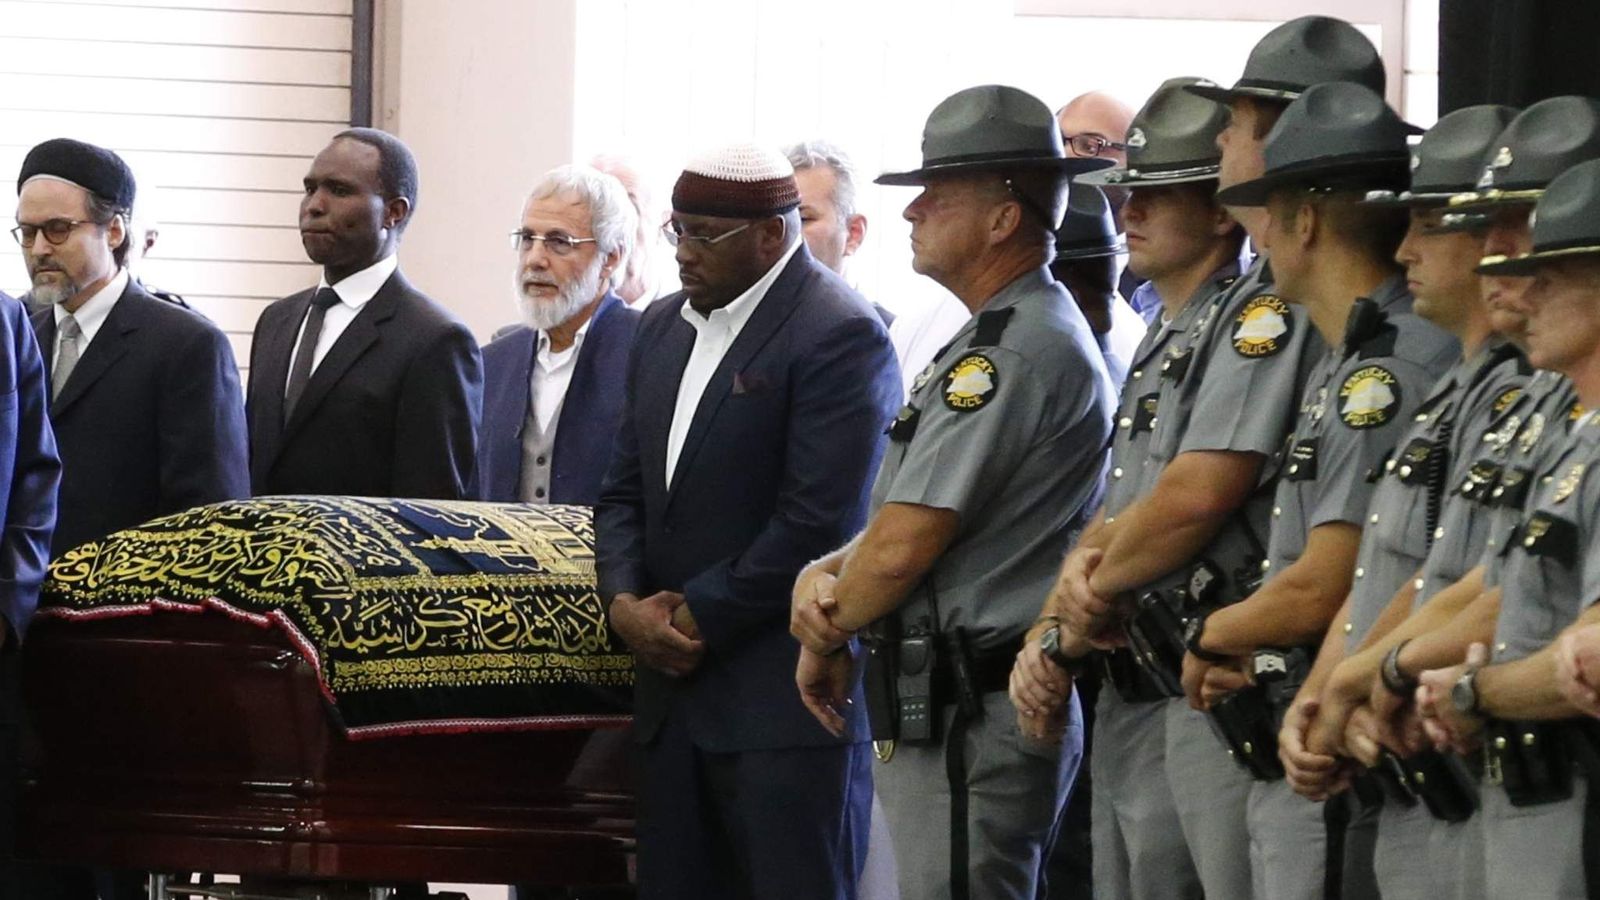 Muslim Funeral Service Honours Muhammad Ali 2037